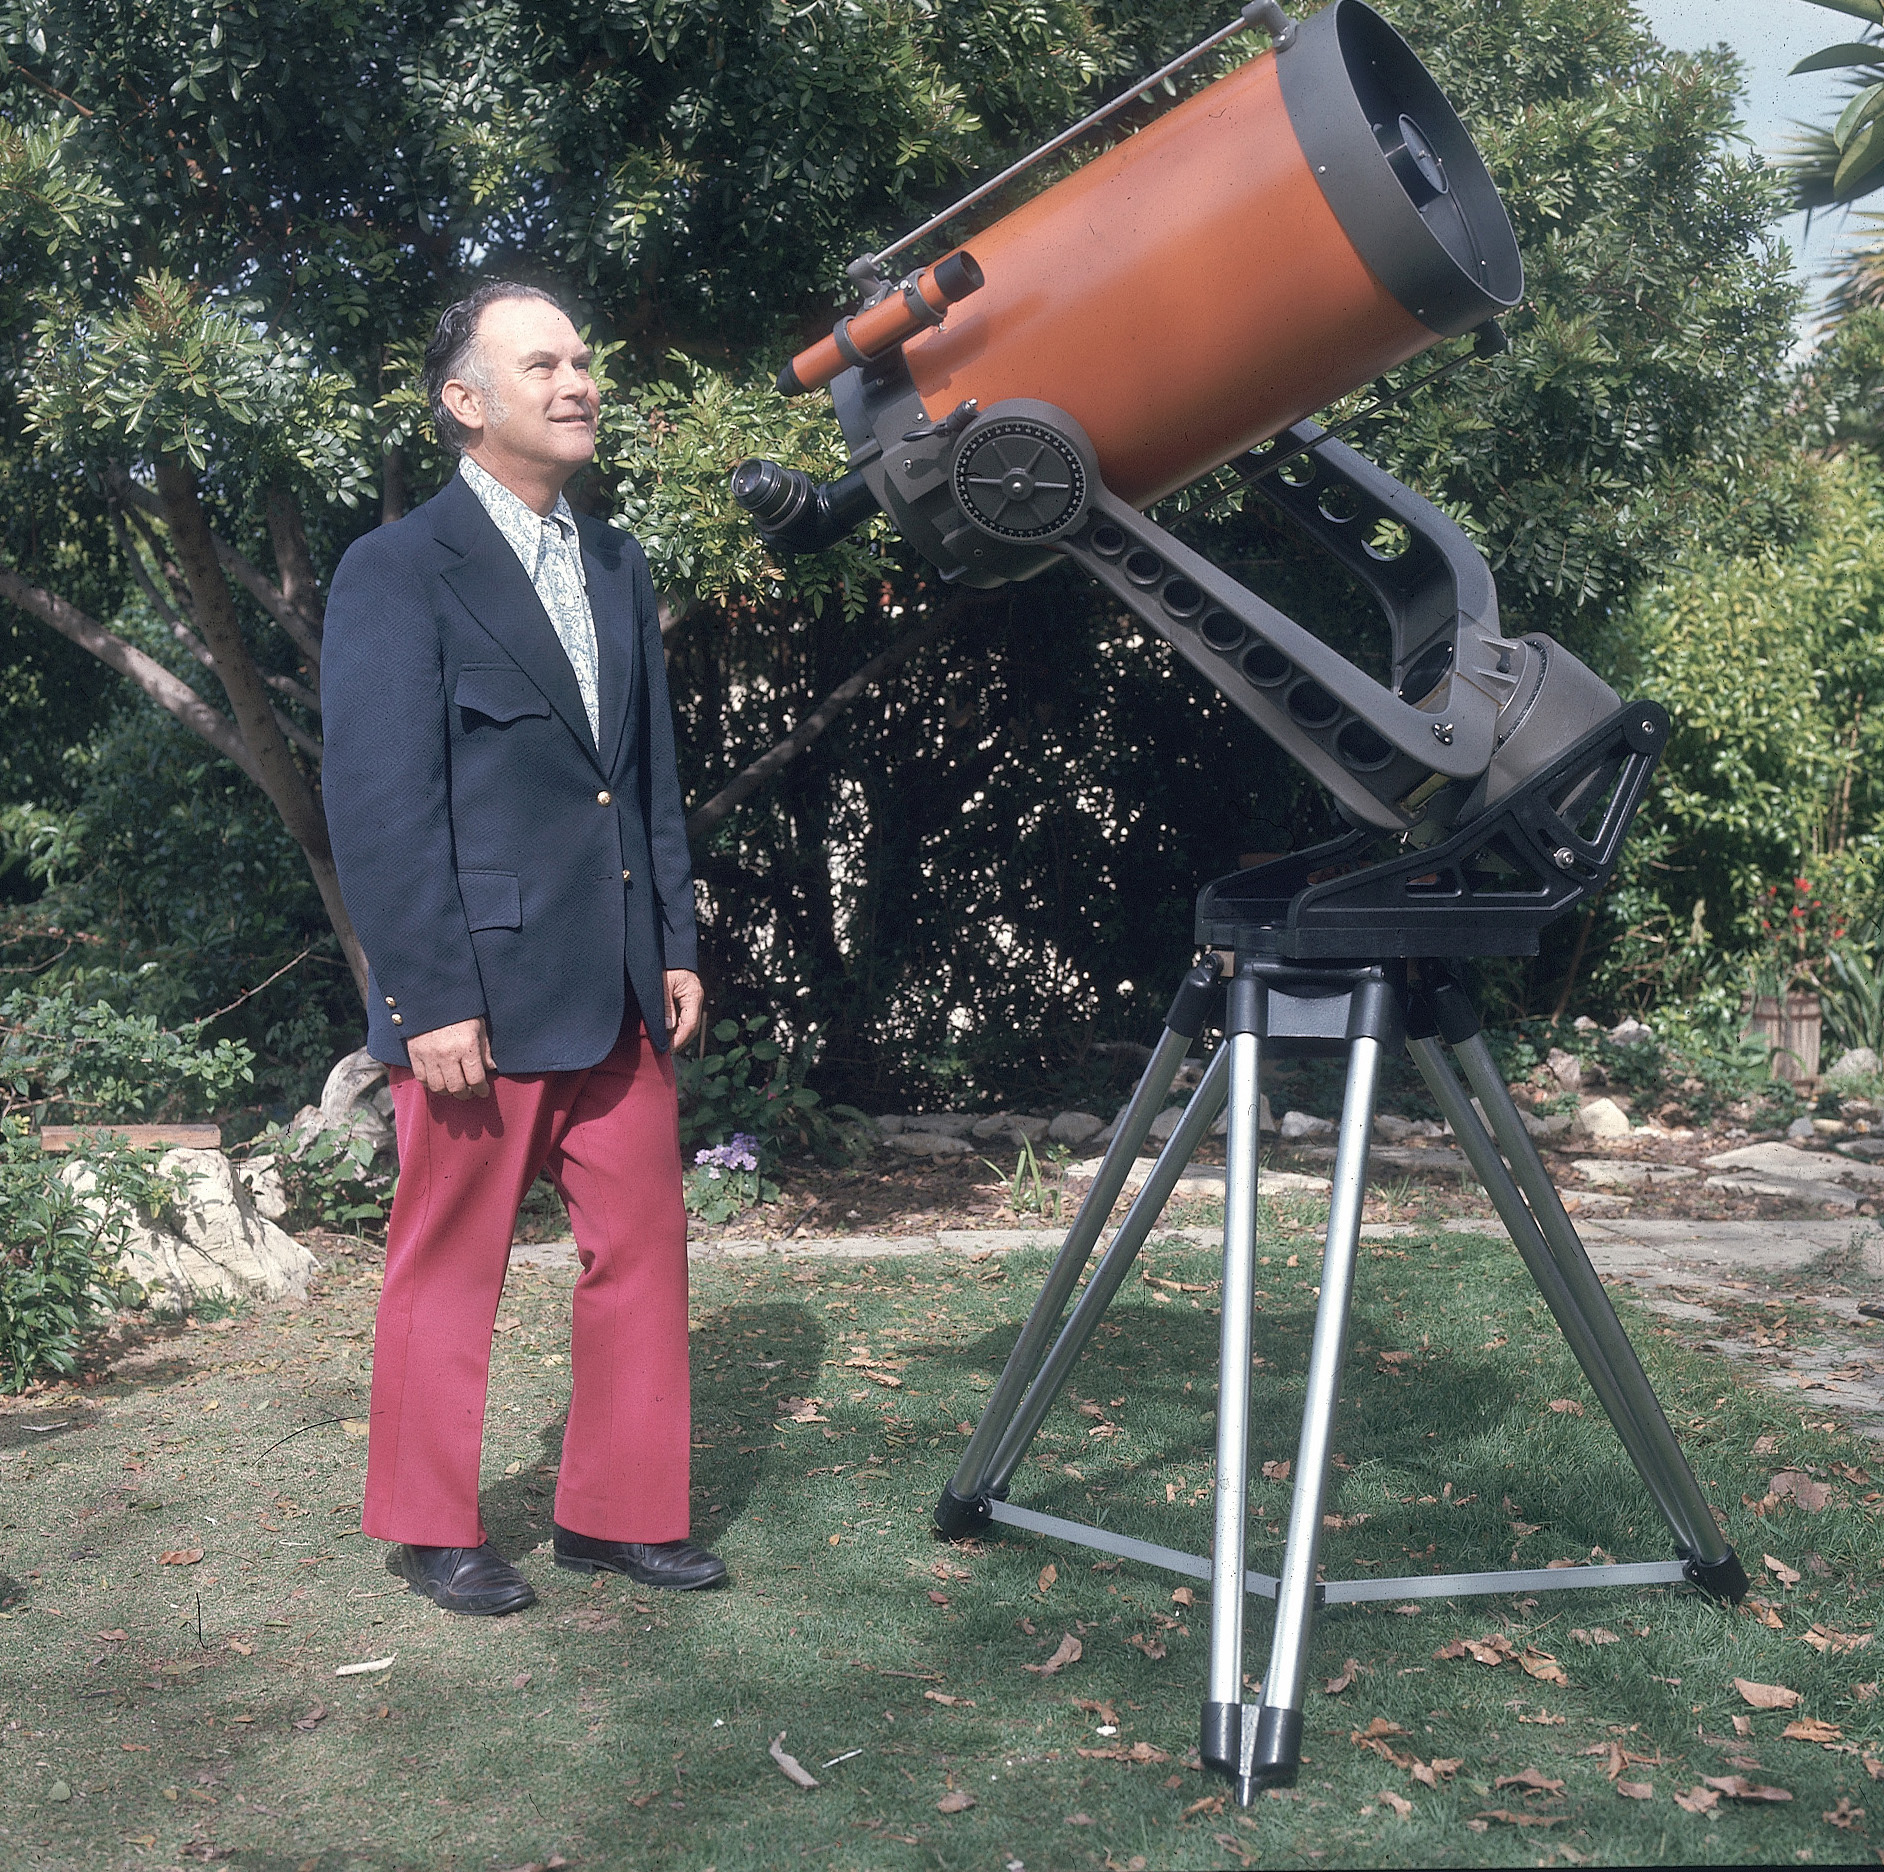 good amature telescope